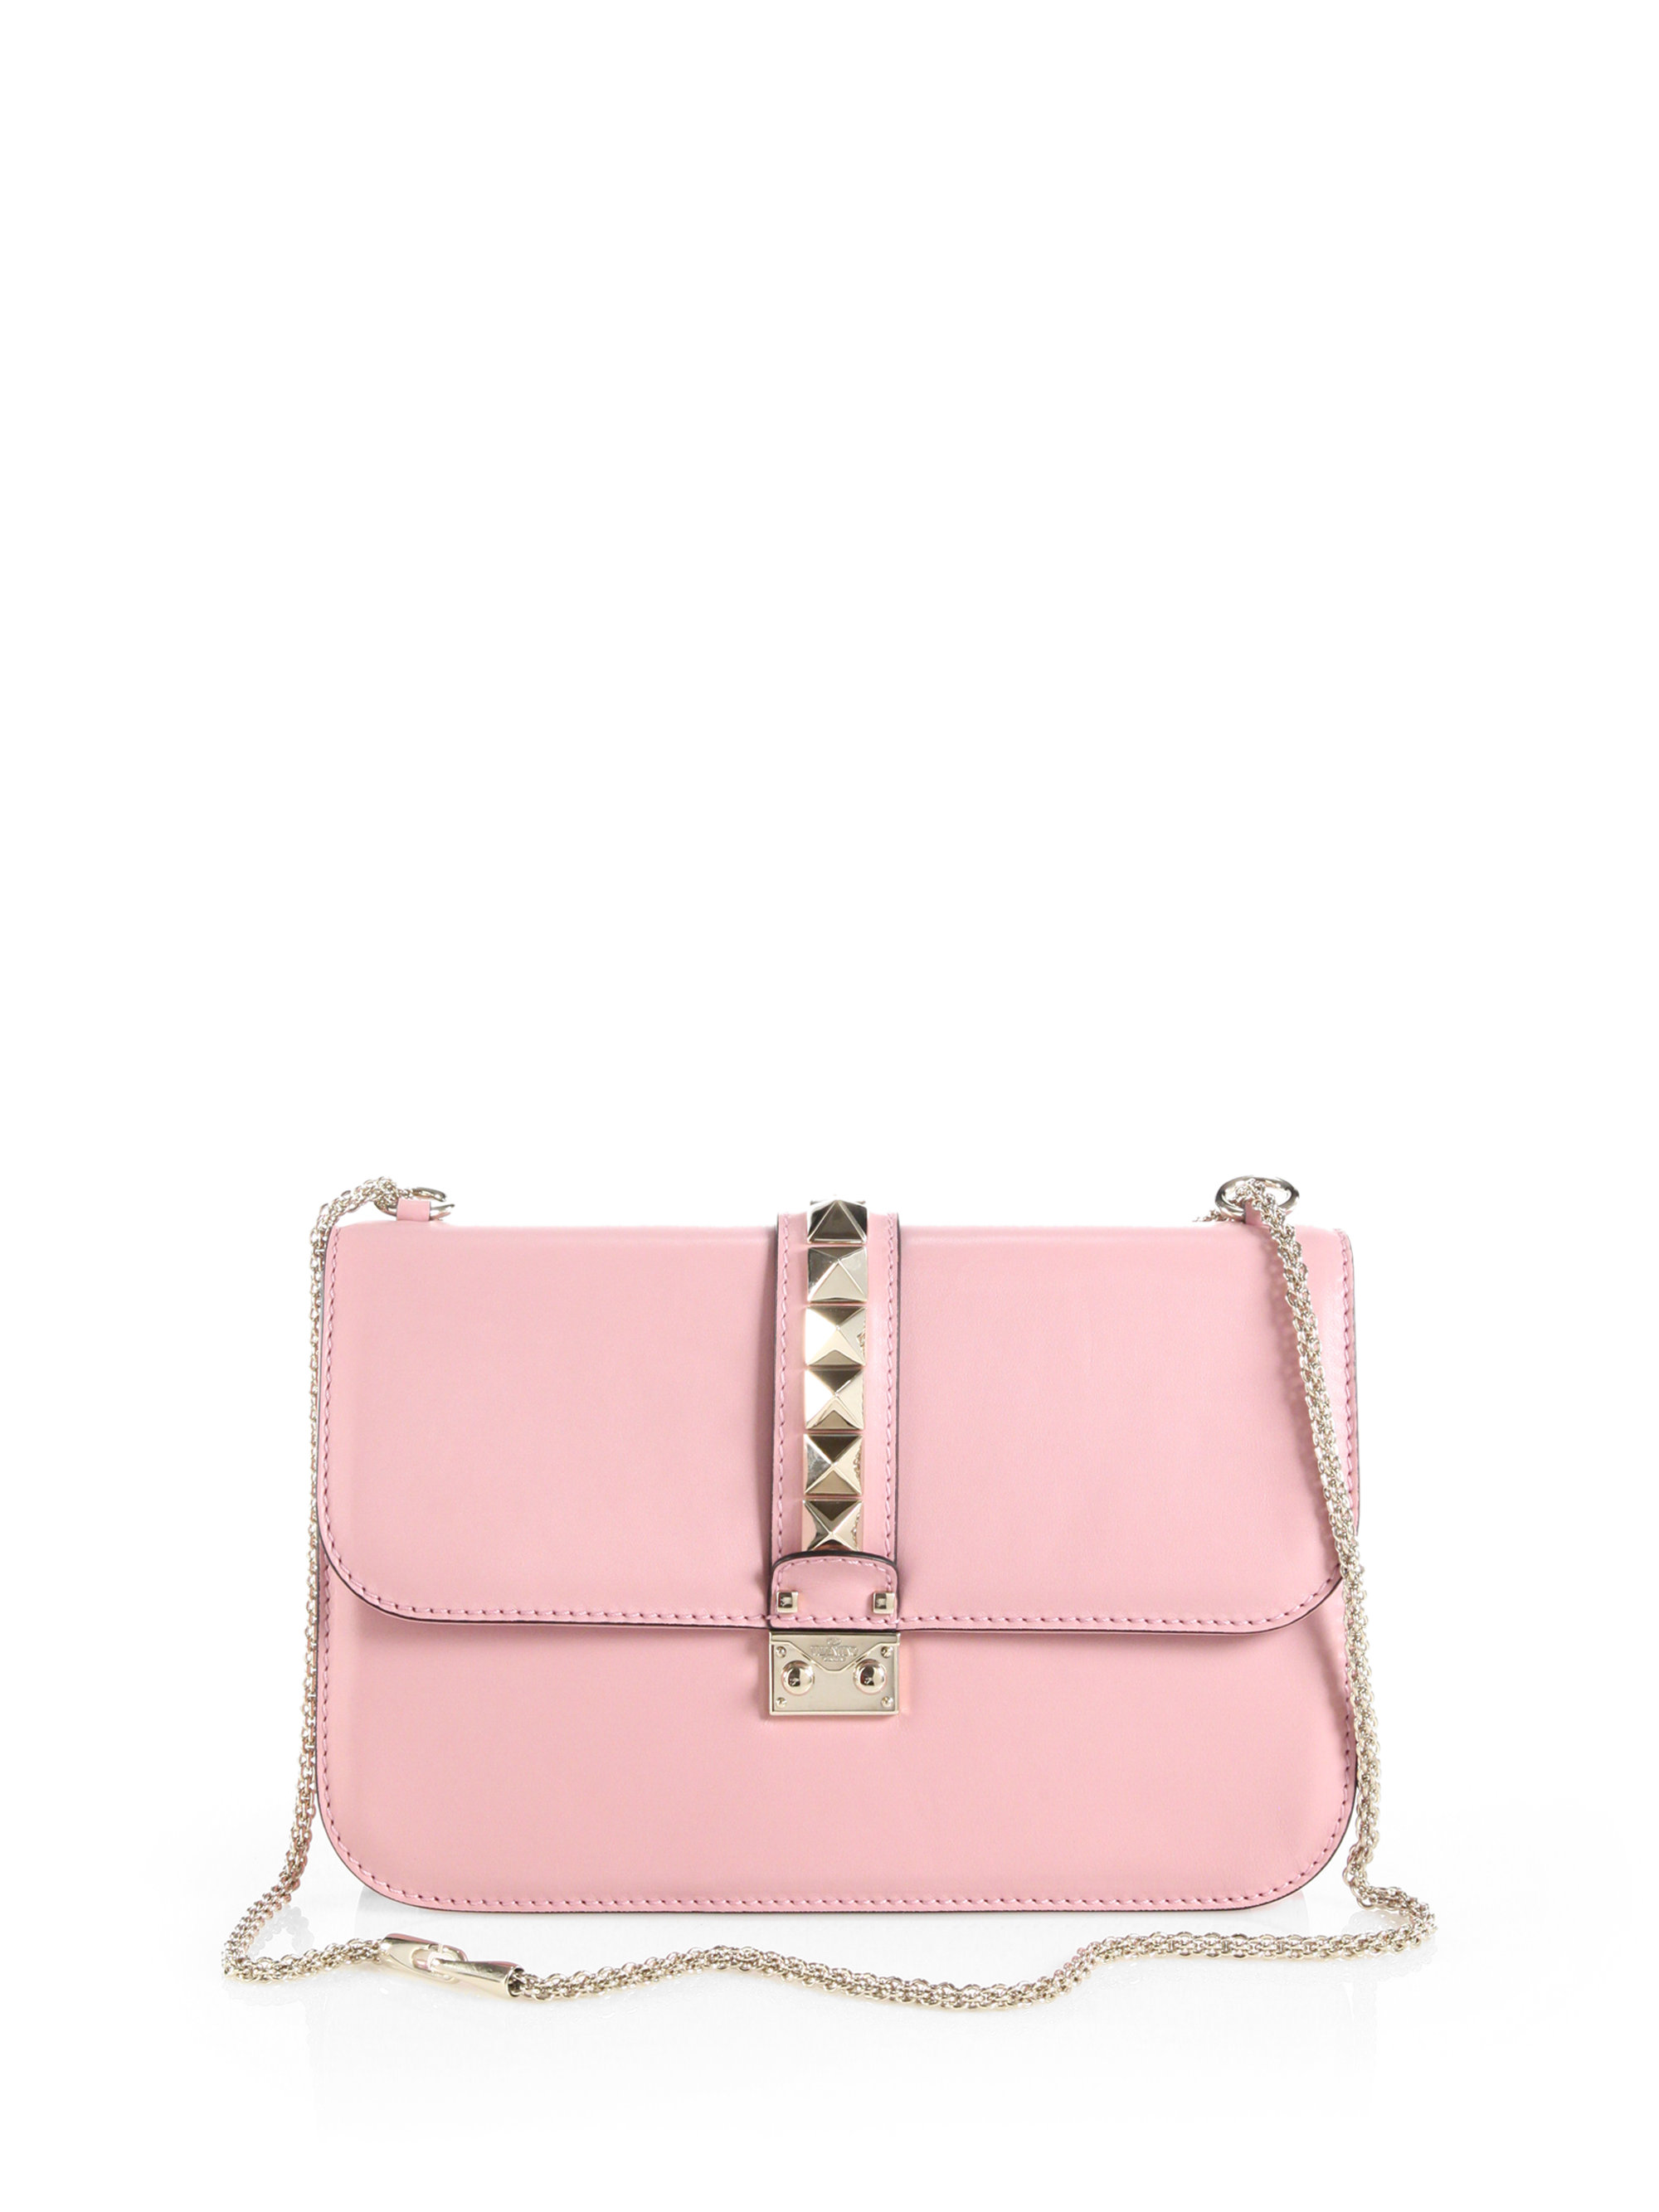 Valentino Rocklock Medium Shoulder Bag in Light Pink (Pink) - Lyst